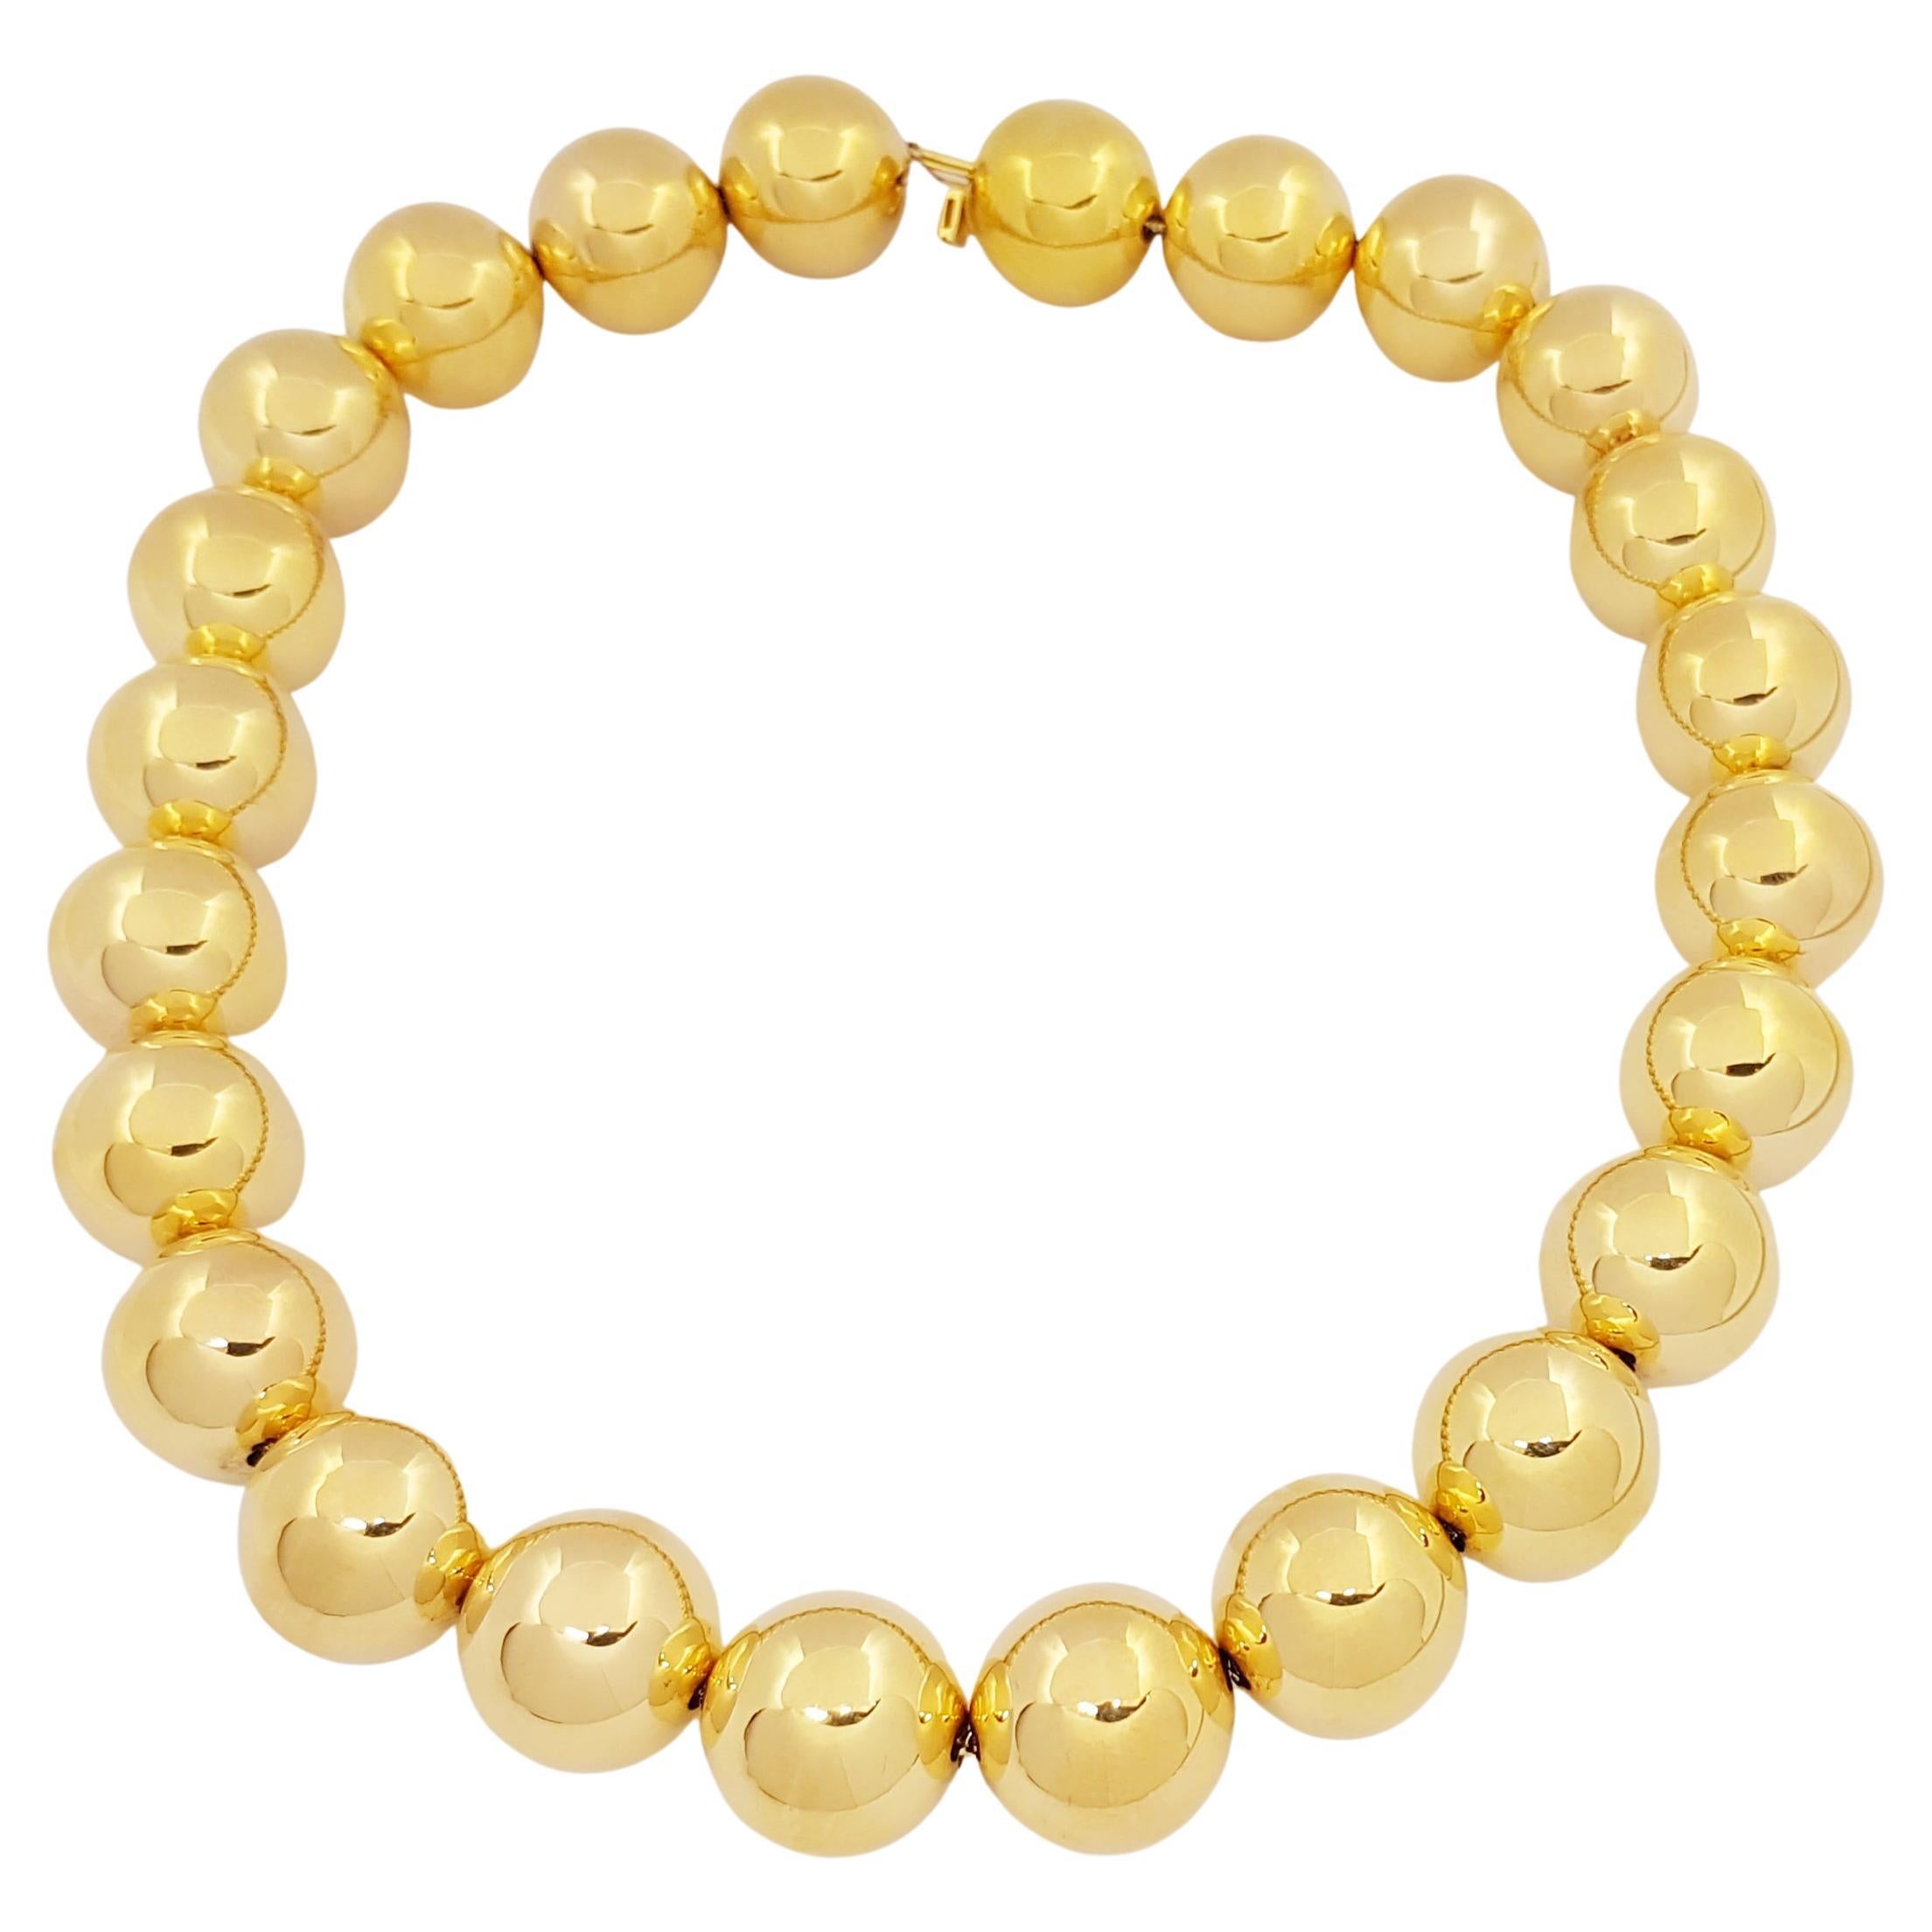 18 Karat Gold Necklace

Width: 2.0 cm 
Length: 48.0 cm
Total Weight: 145.78 grams

Gold Ball: 20 mm/24 pcs

